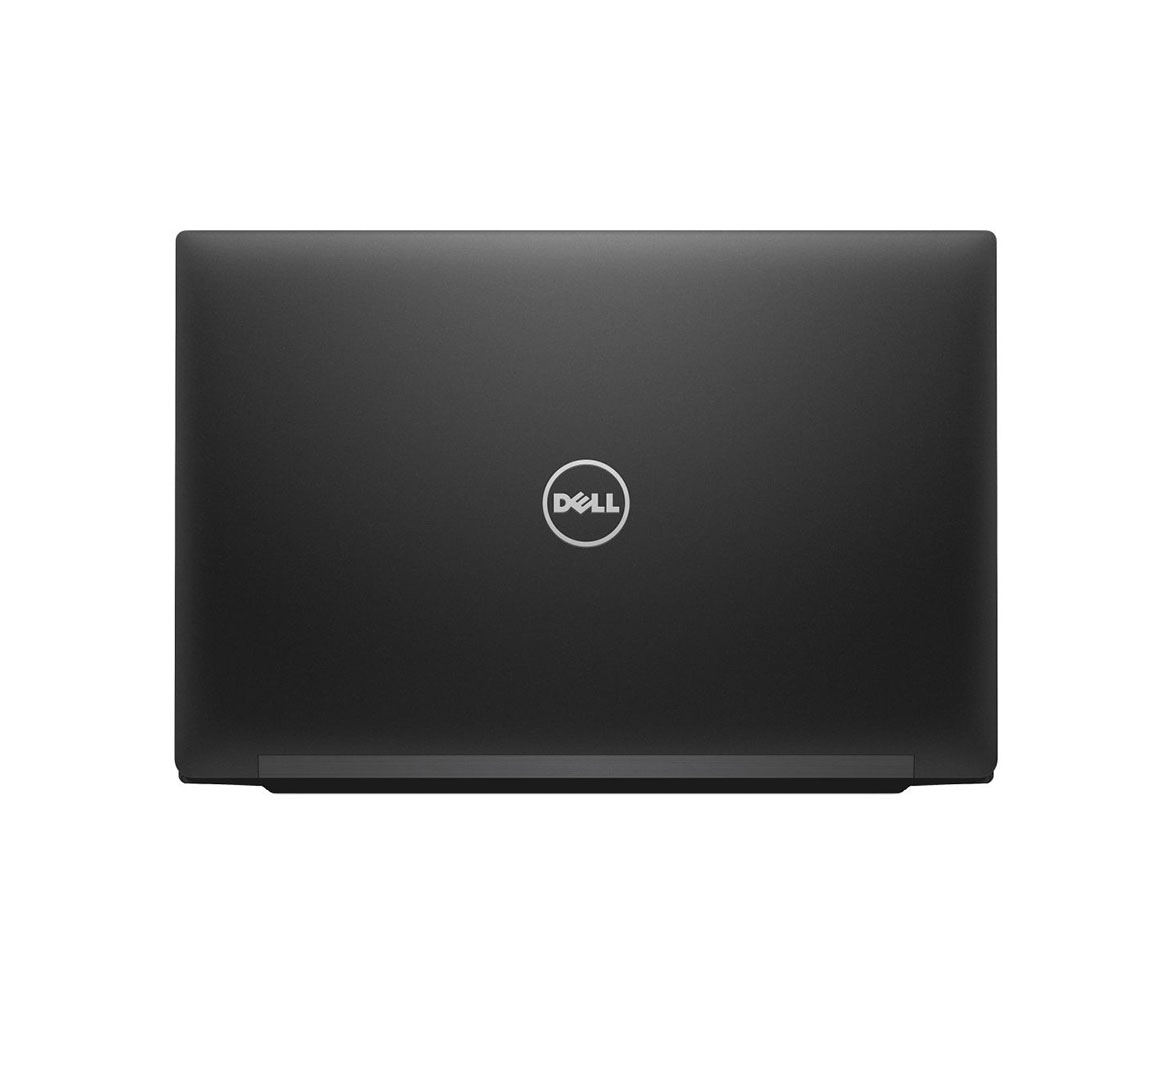 Dell Latitude 7490 Business Laptop, Intel Core i5-8th Generation CPU, 8GB RAM, 512GB SSD, 14.1 inch Display, Windows 10